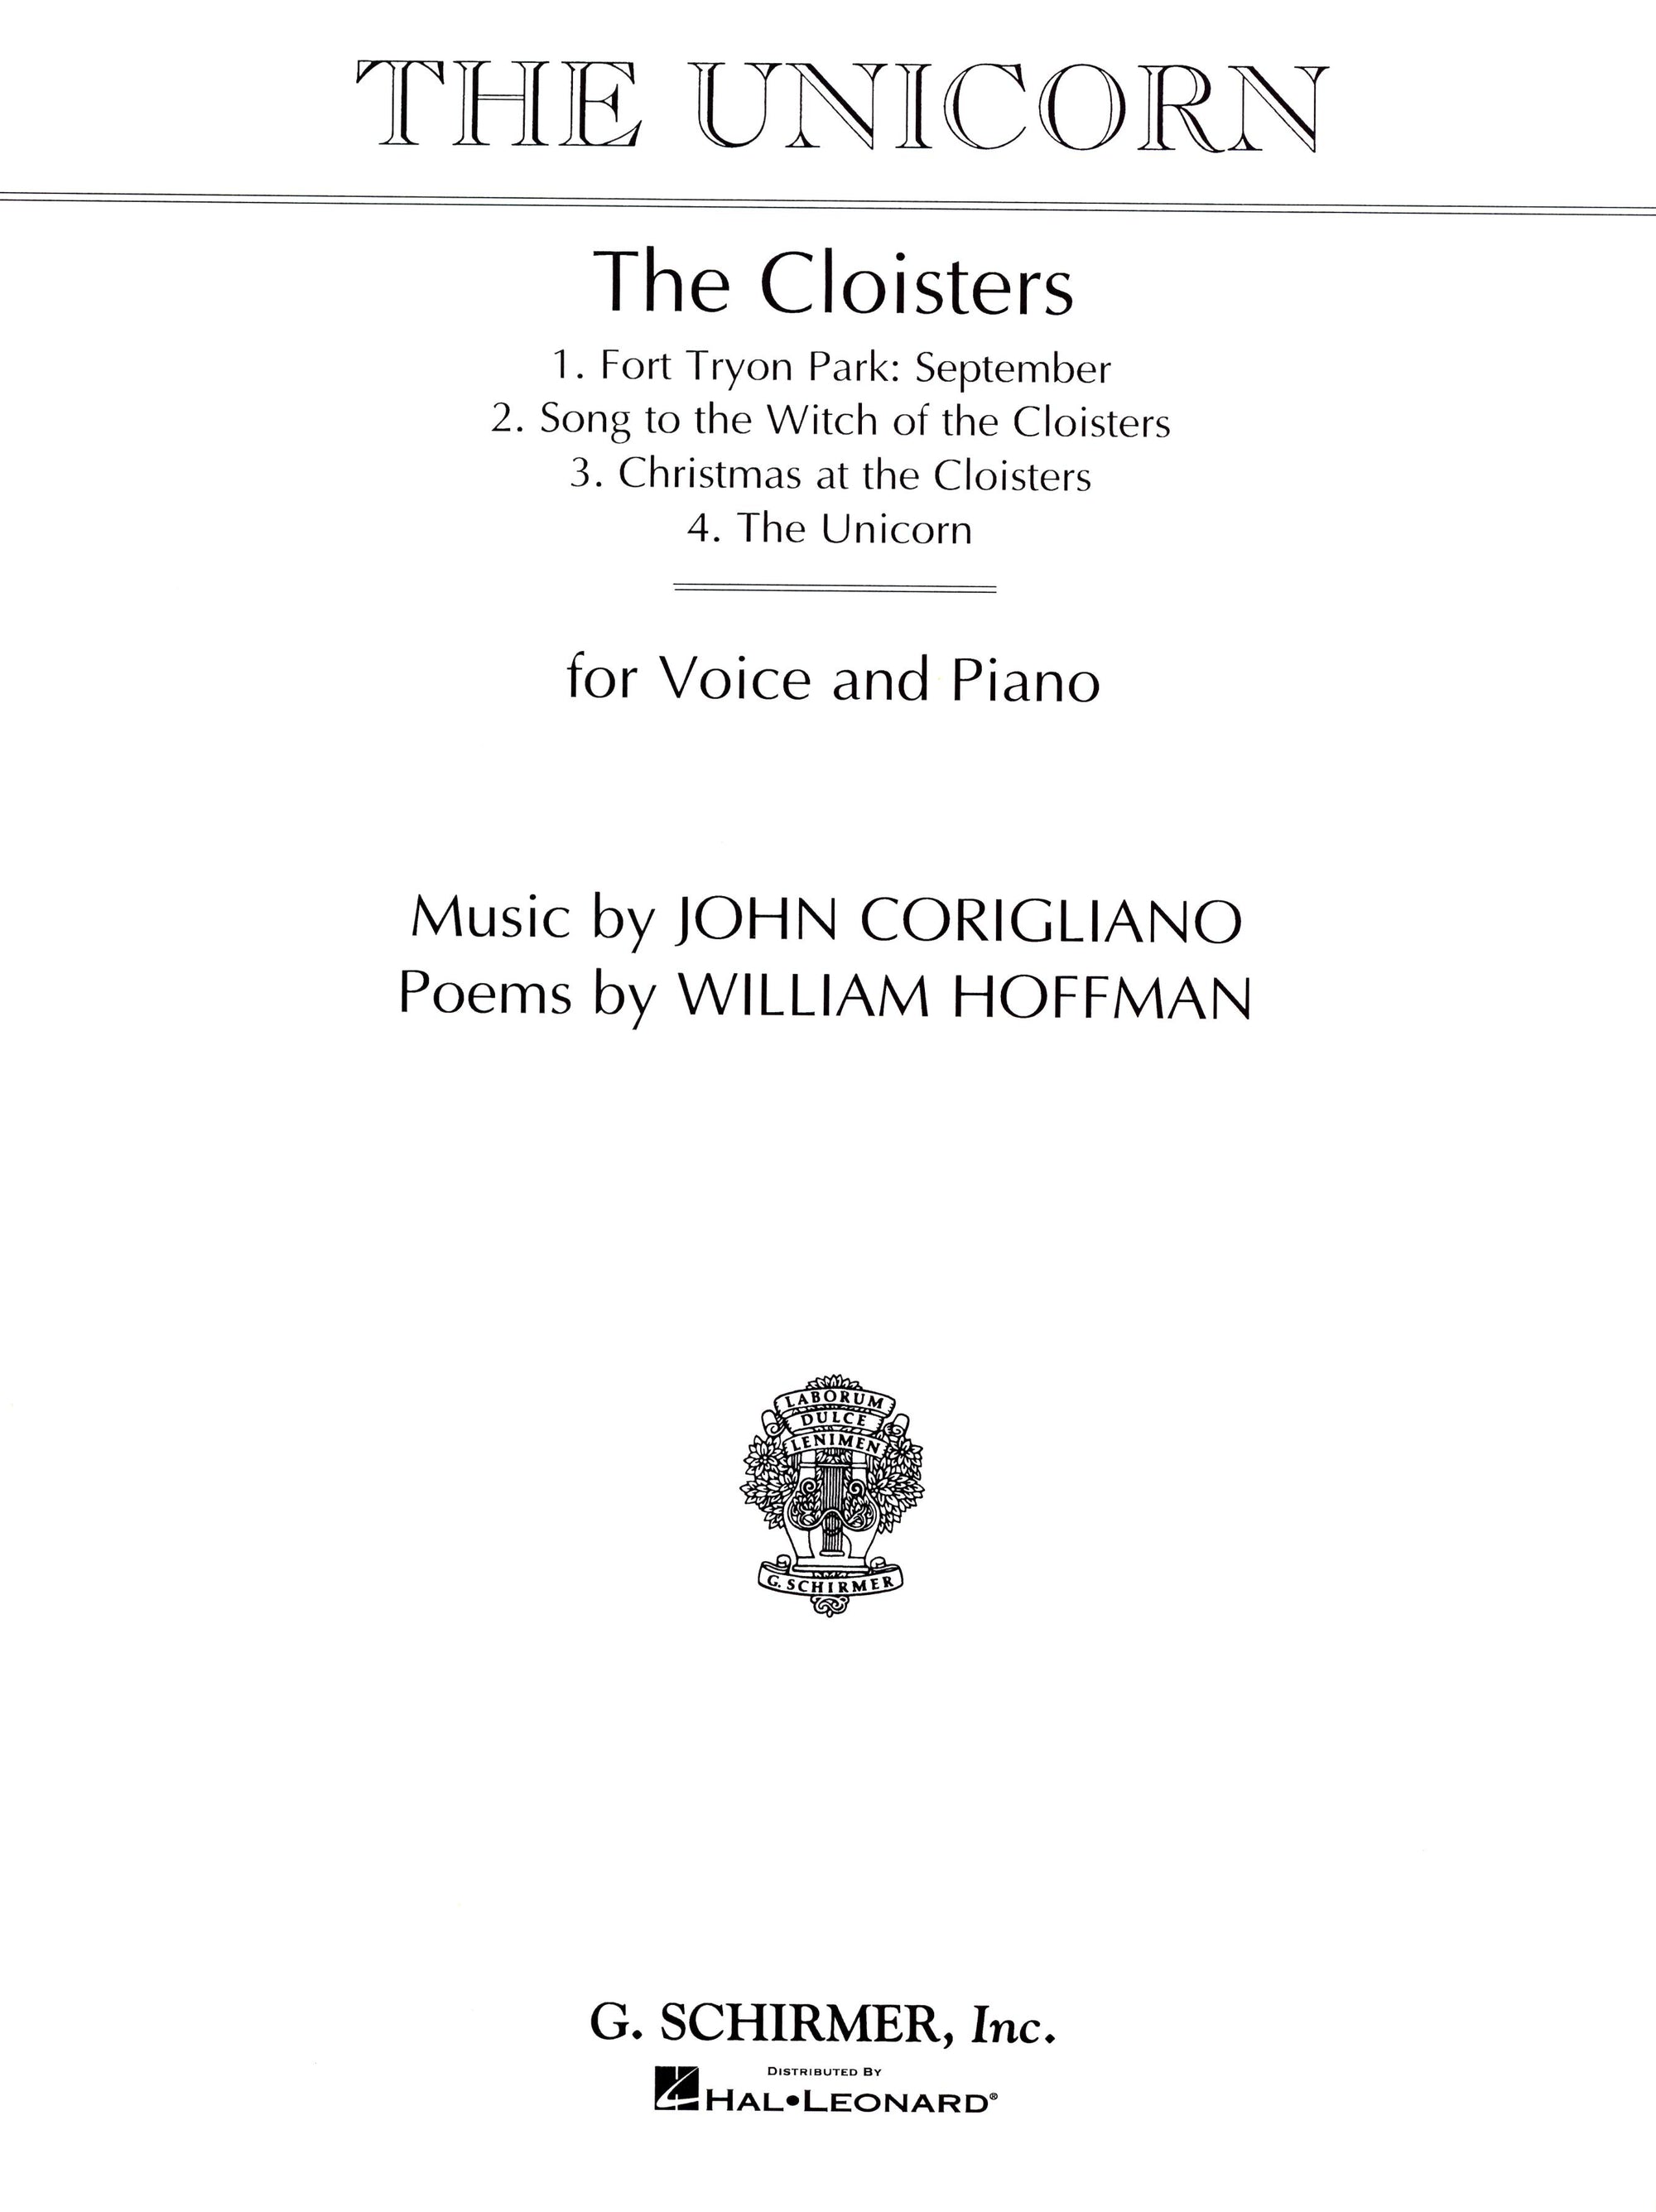 Corigliano: The Unicorn (from The Cloisters)